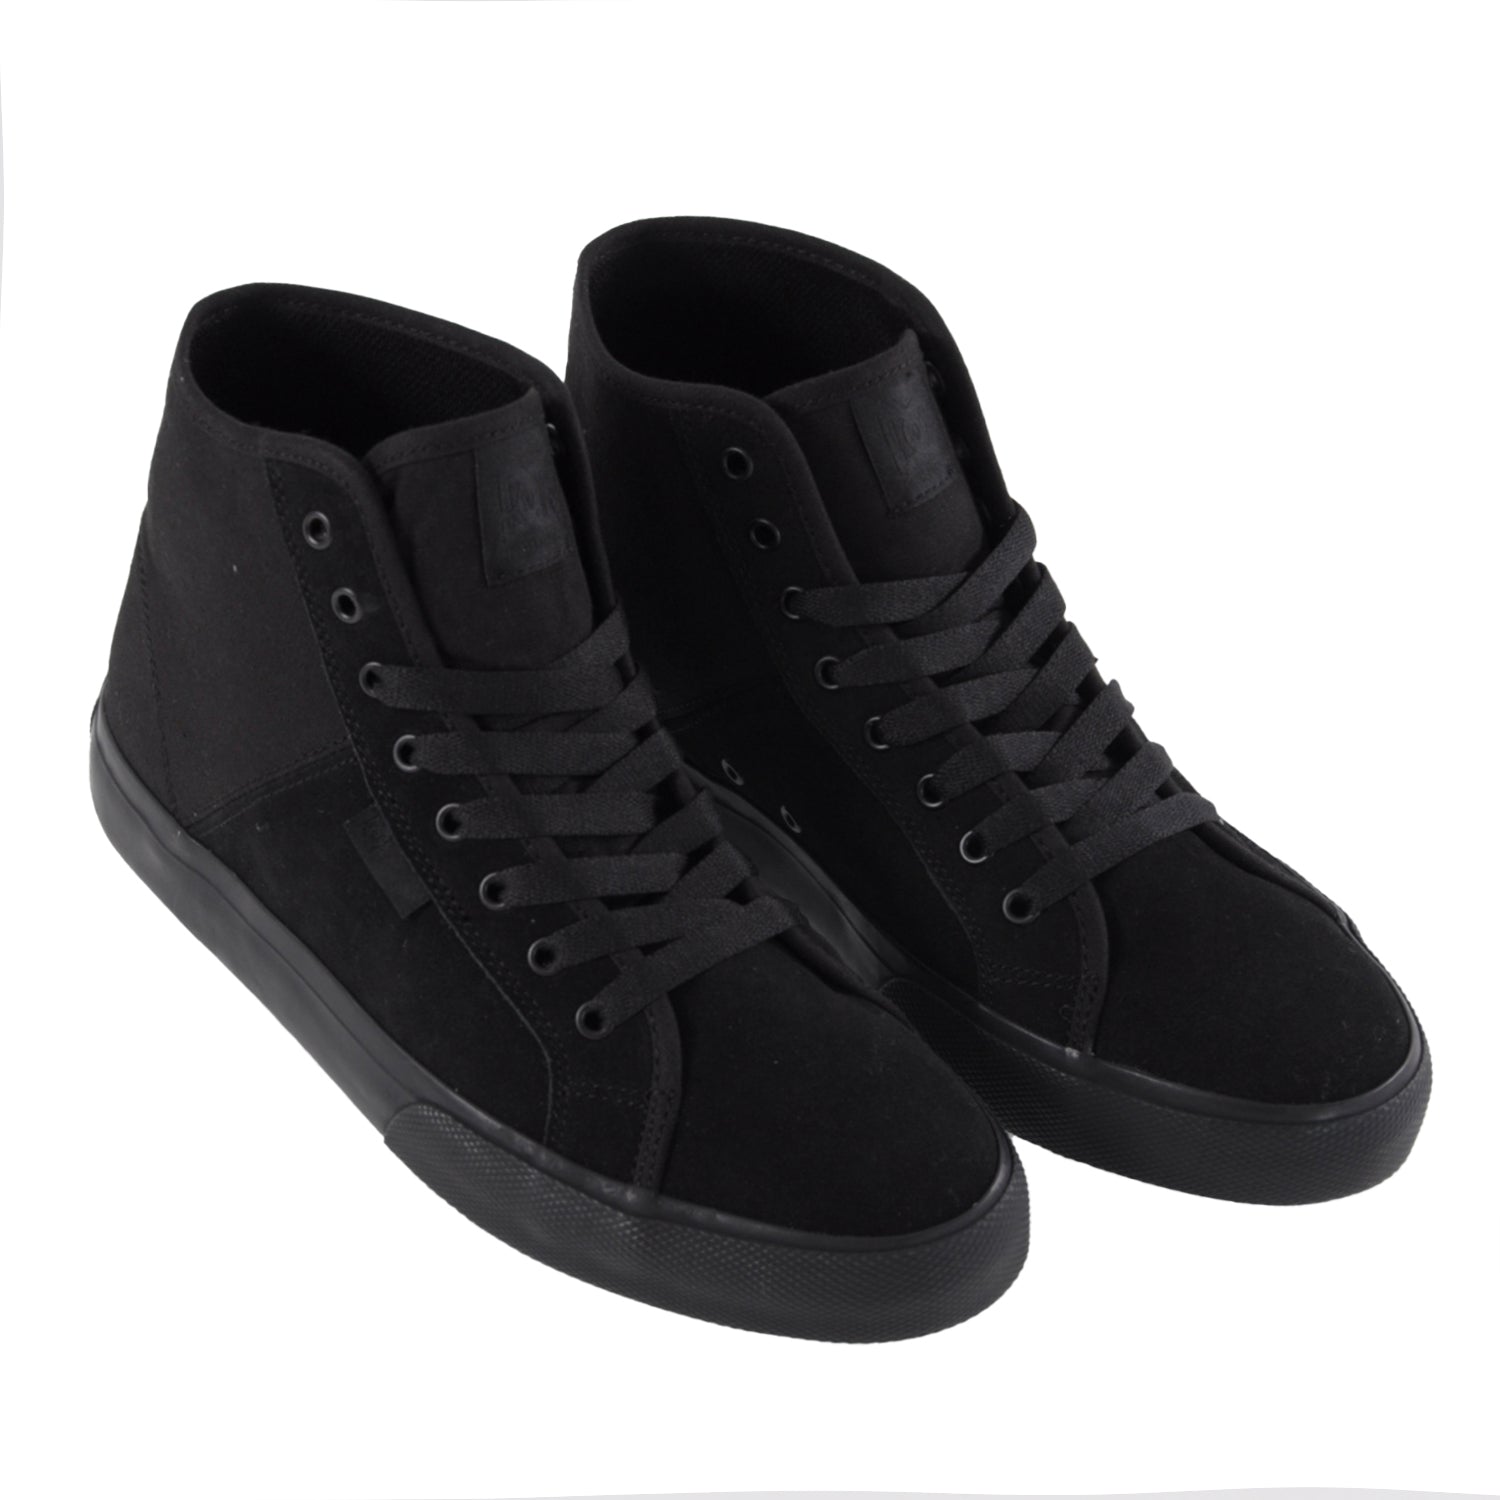 DC Shoes Manual High Skate Shoes - Black / Black - Prime Delux Store